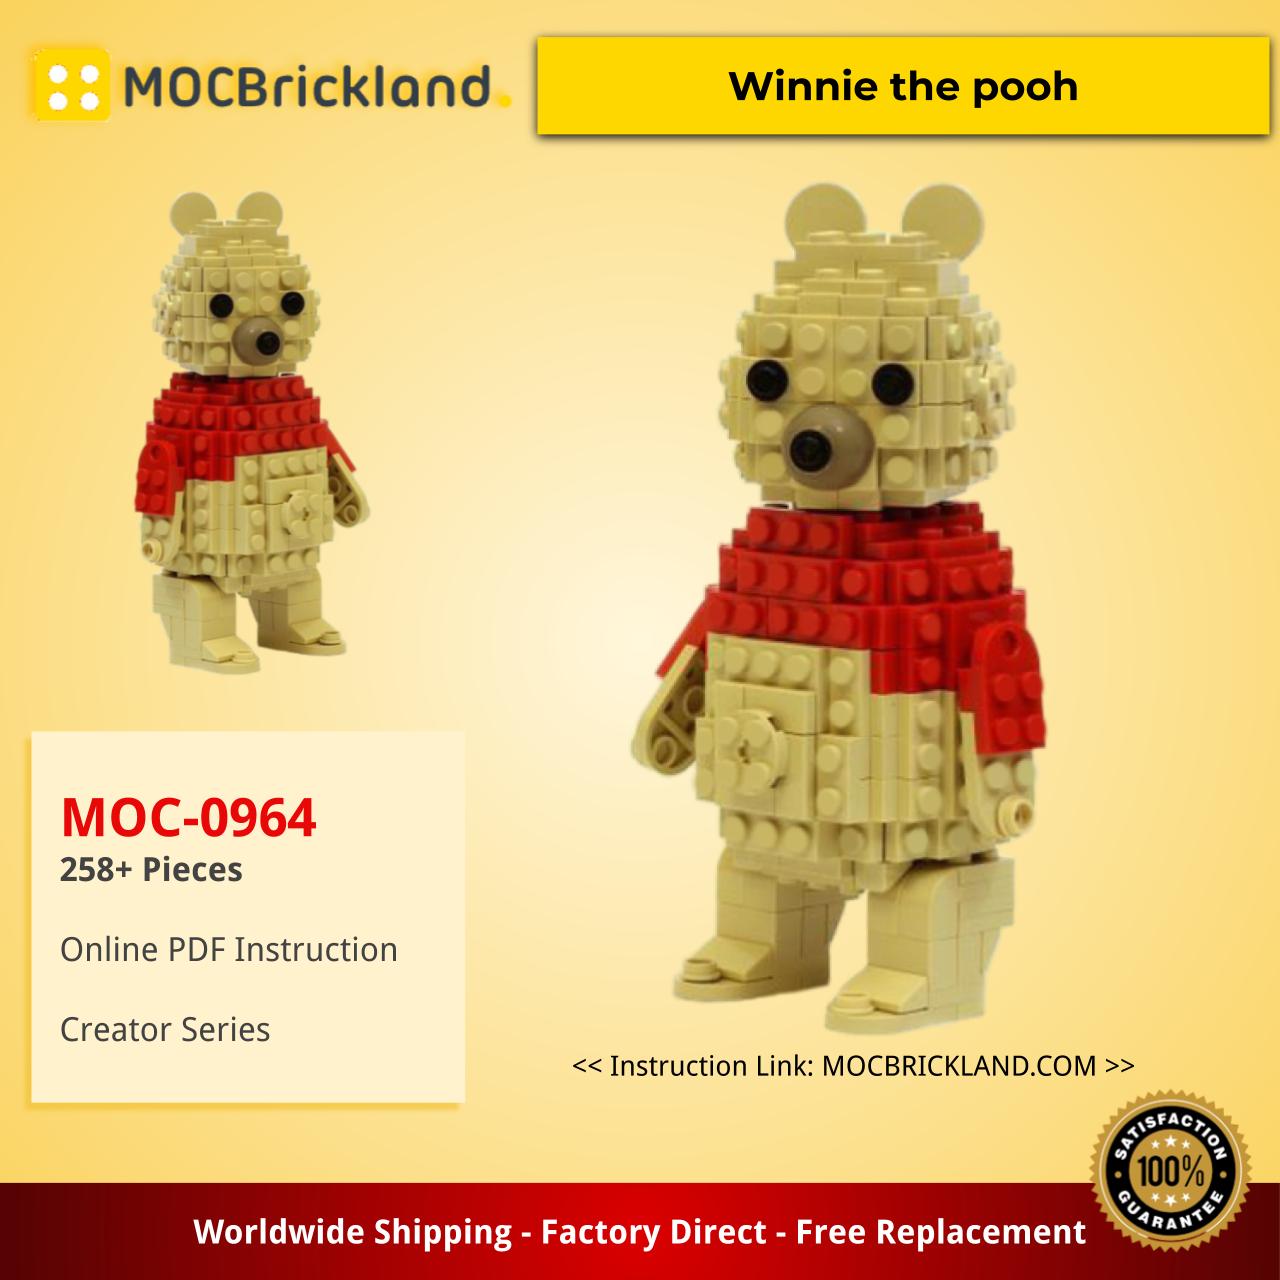 Creator MOC-0964 Winnie the pooh by JKBrickworks MOCBRICKLAND